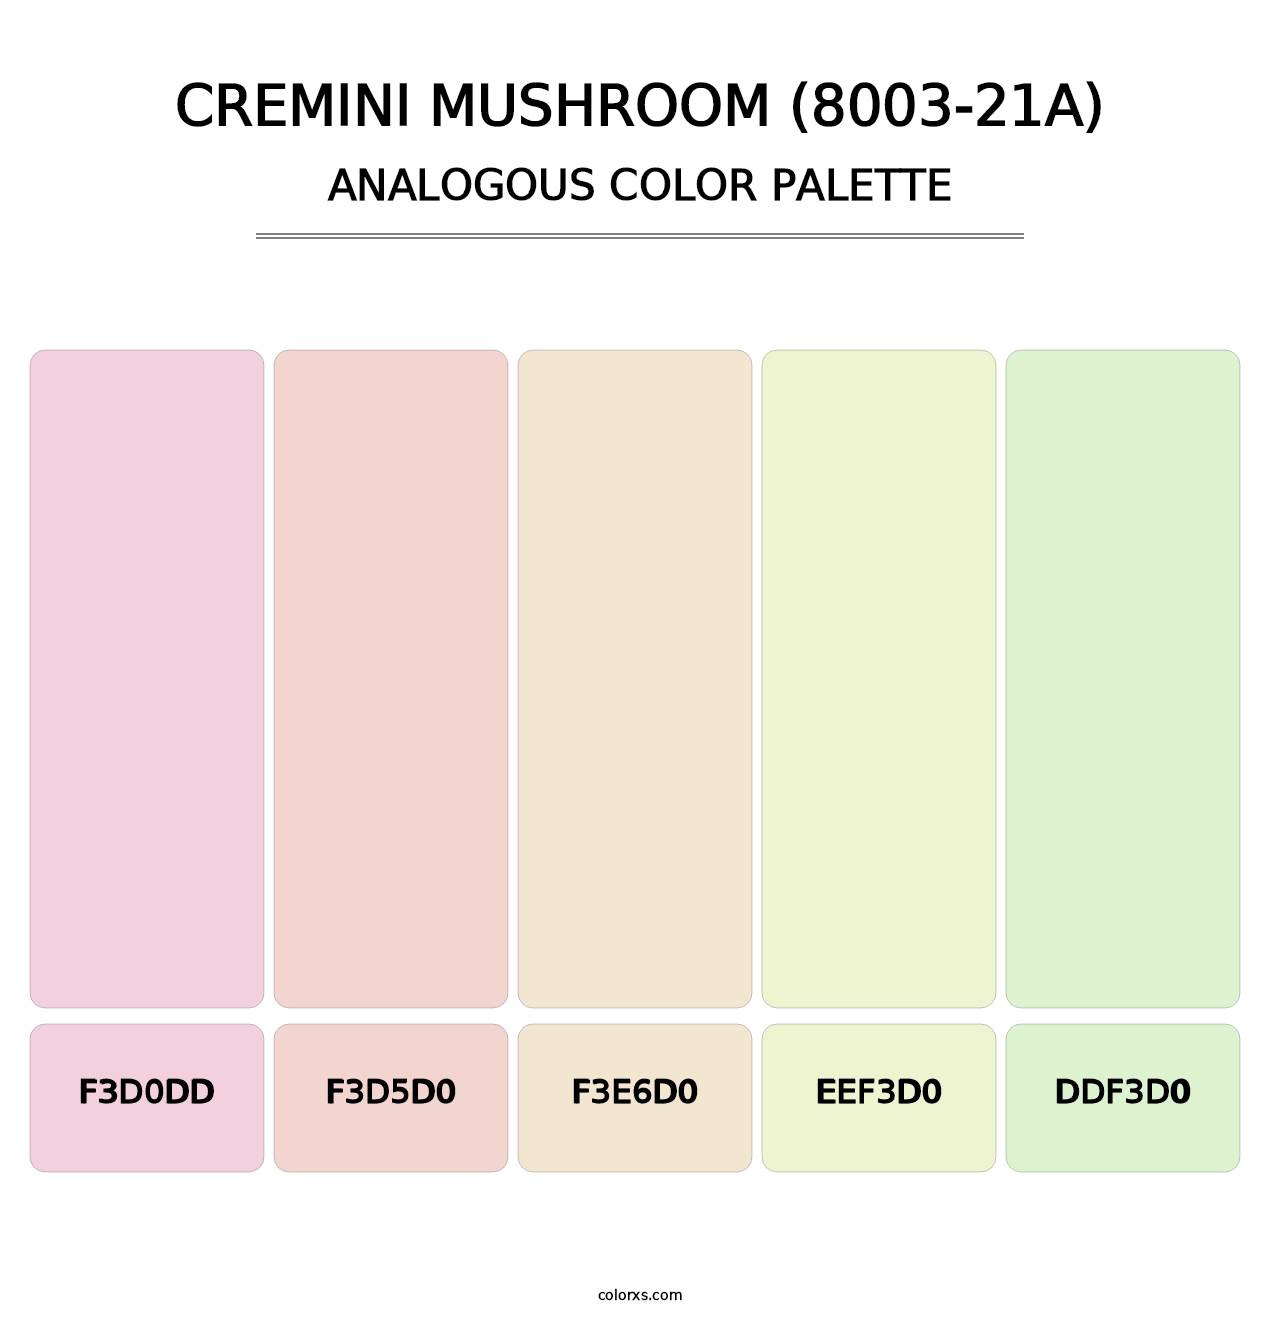 Cremini Mushroom (8003-21A) - Analogous Color Palette